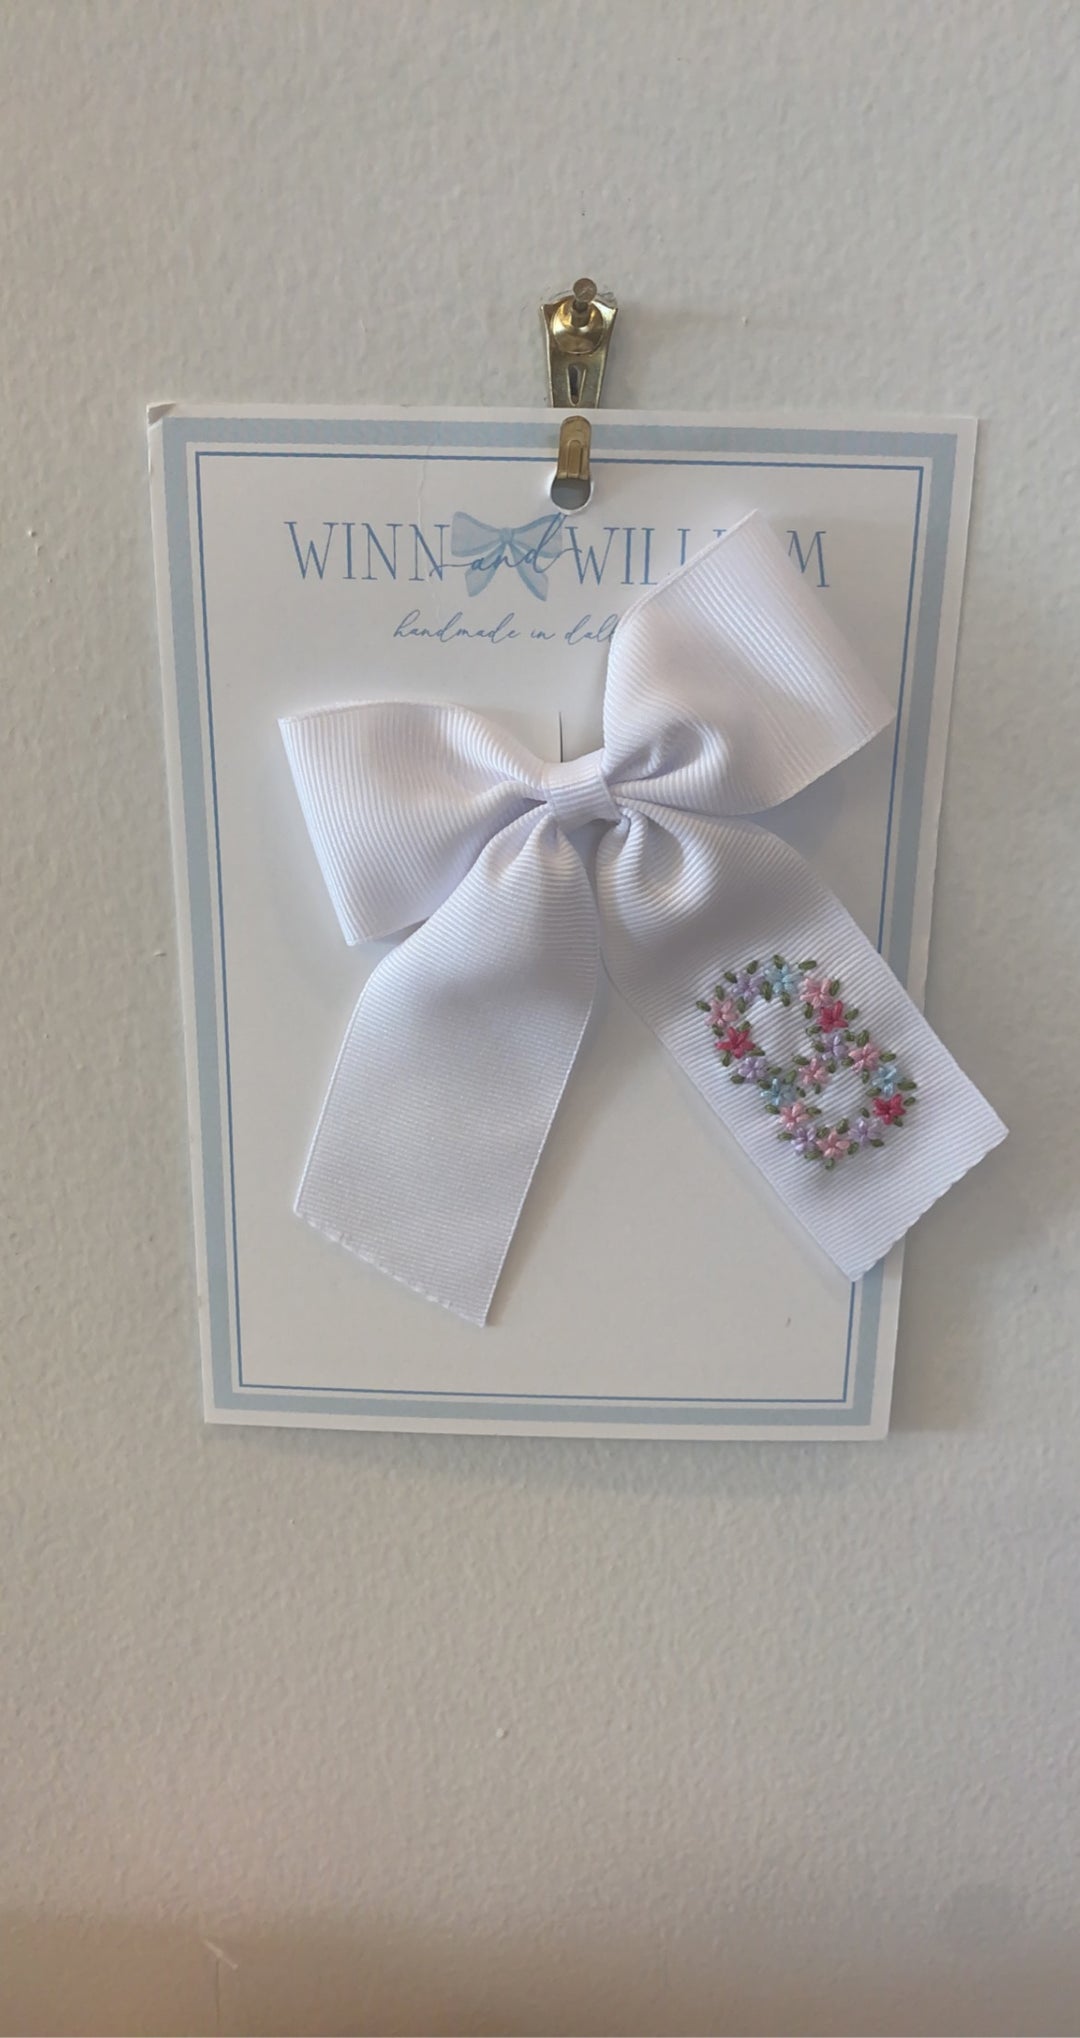 Winn & William Floral Letter Bow